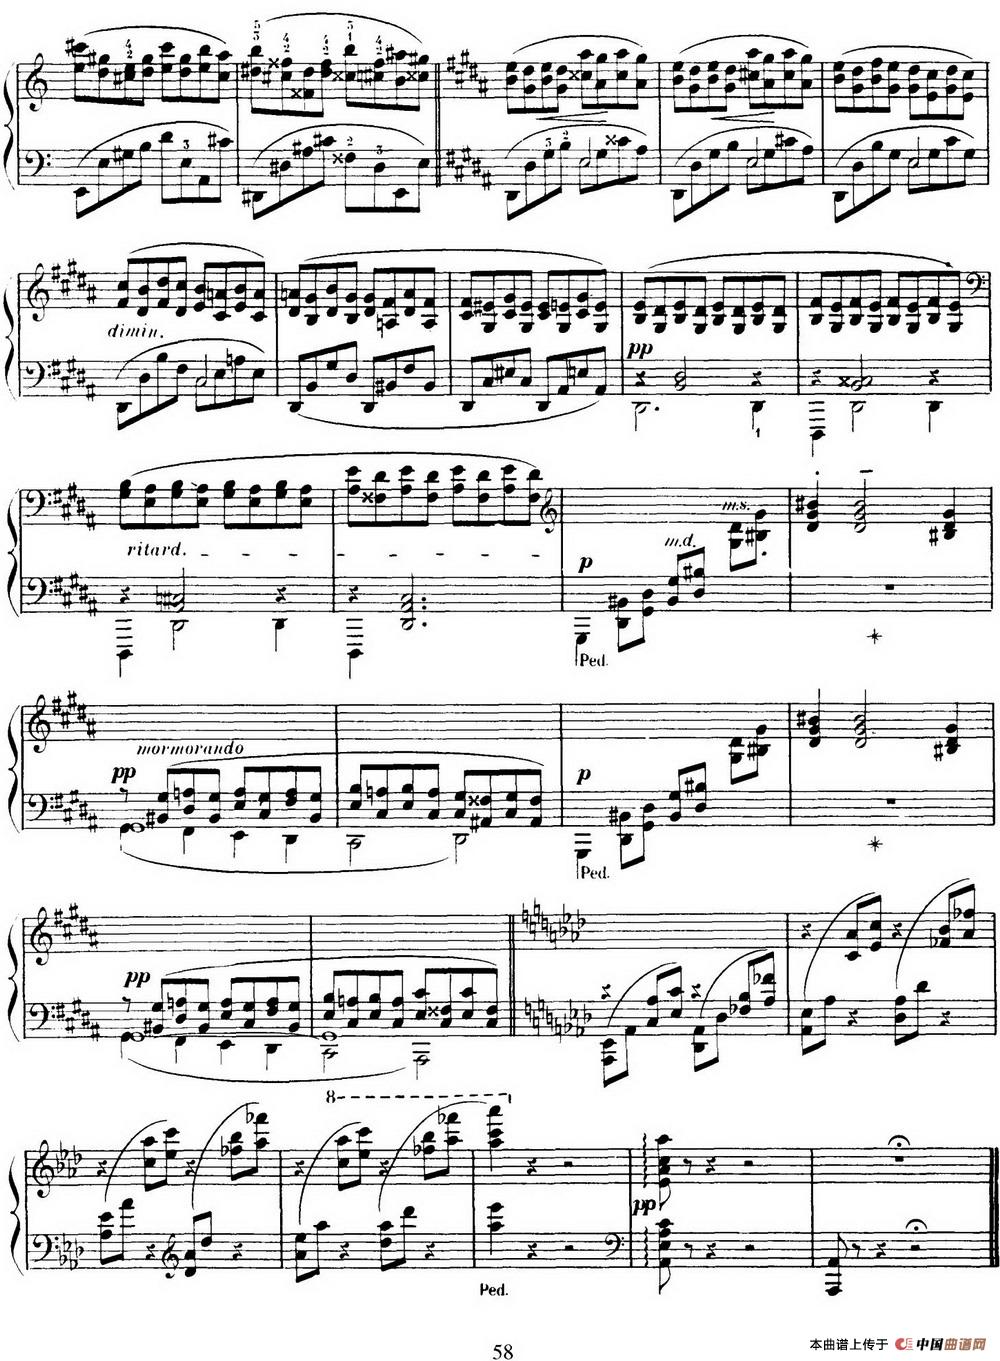 15 Etudes de Virtuosité Op.72 No.13（十五首钢琴练习曲之十三）(1)_058-.jpg